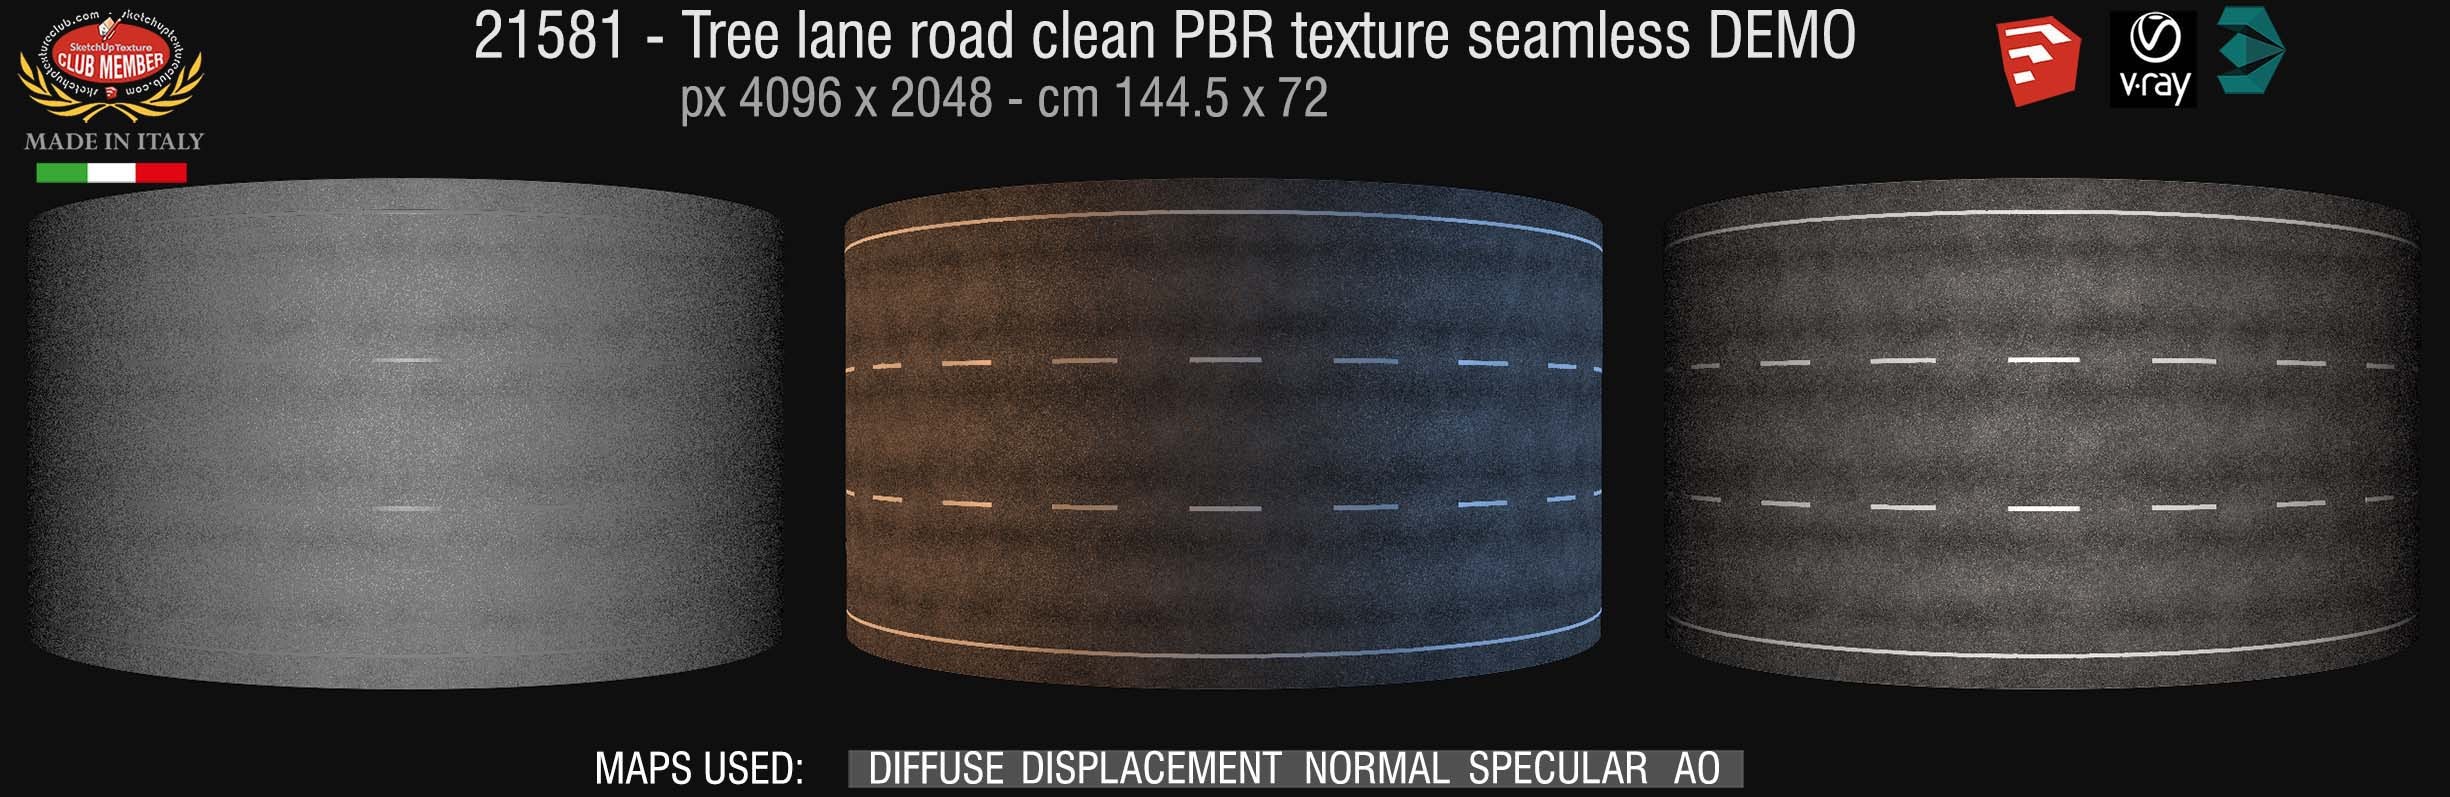 21581 Tree lane road clean PBR texture seamless DEMO